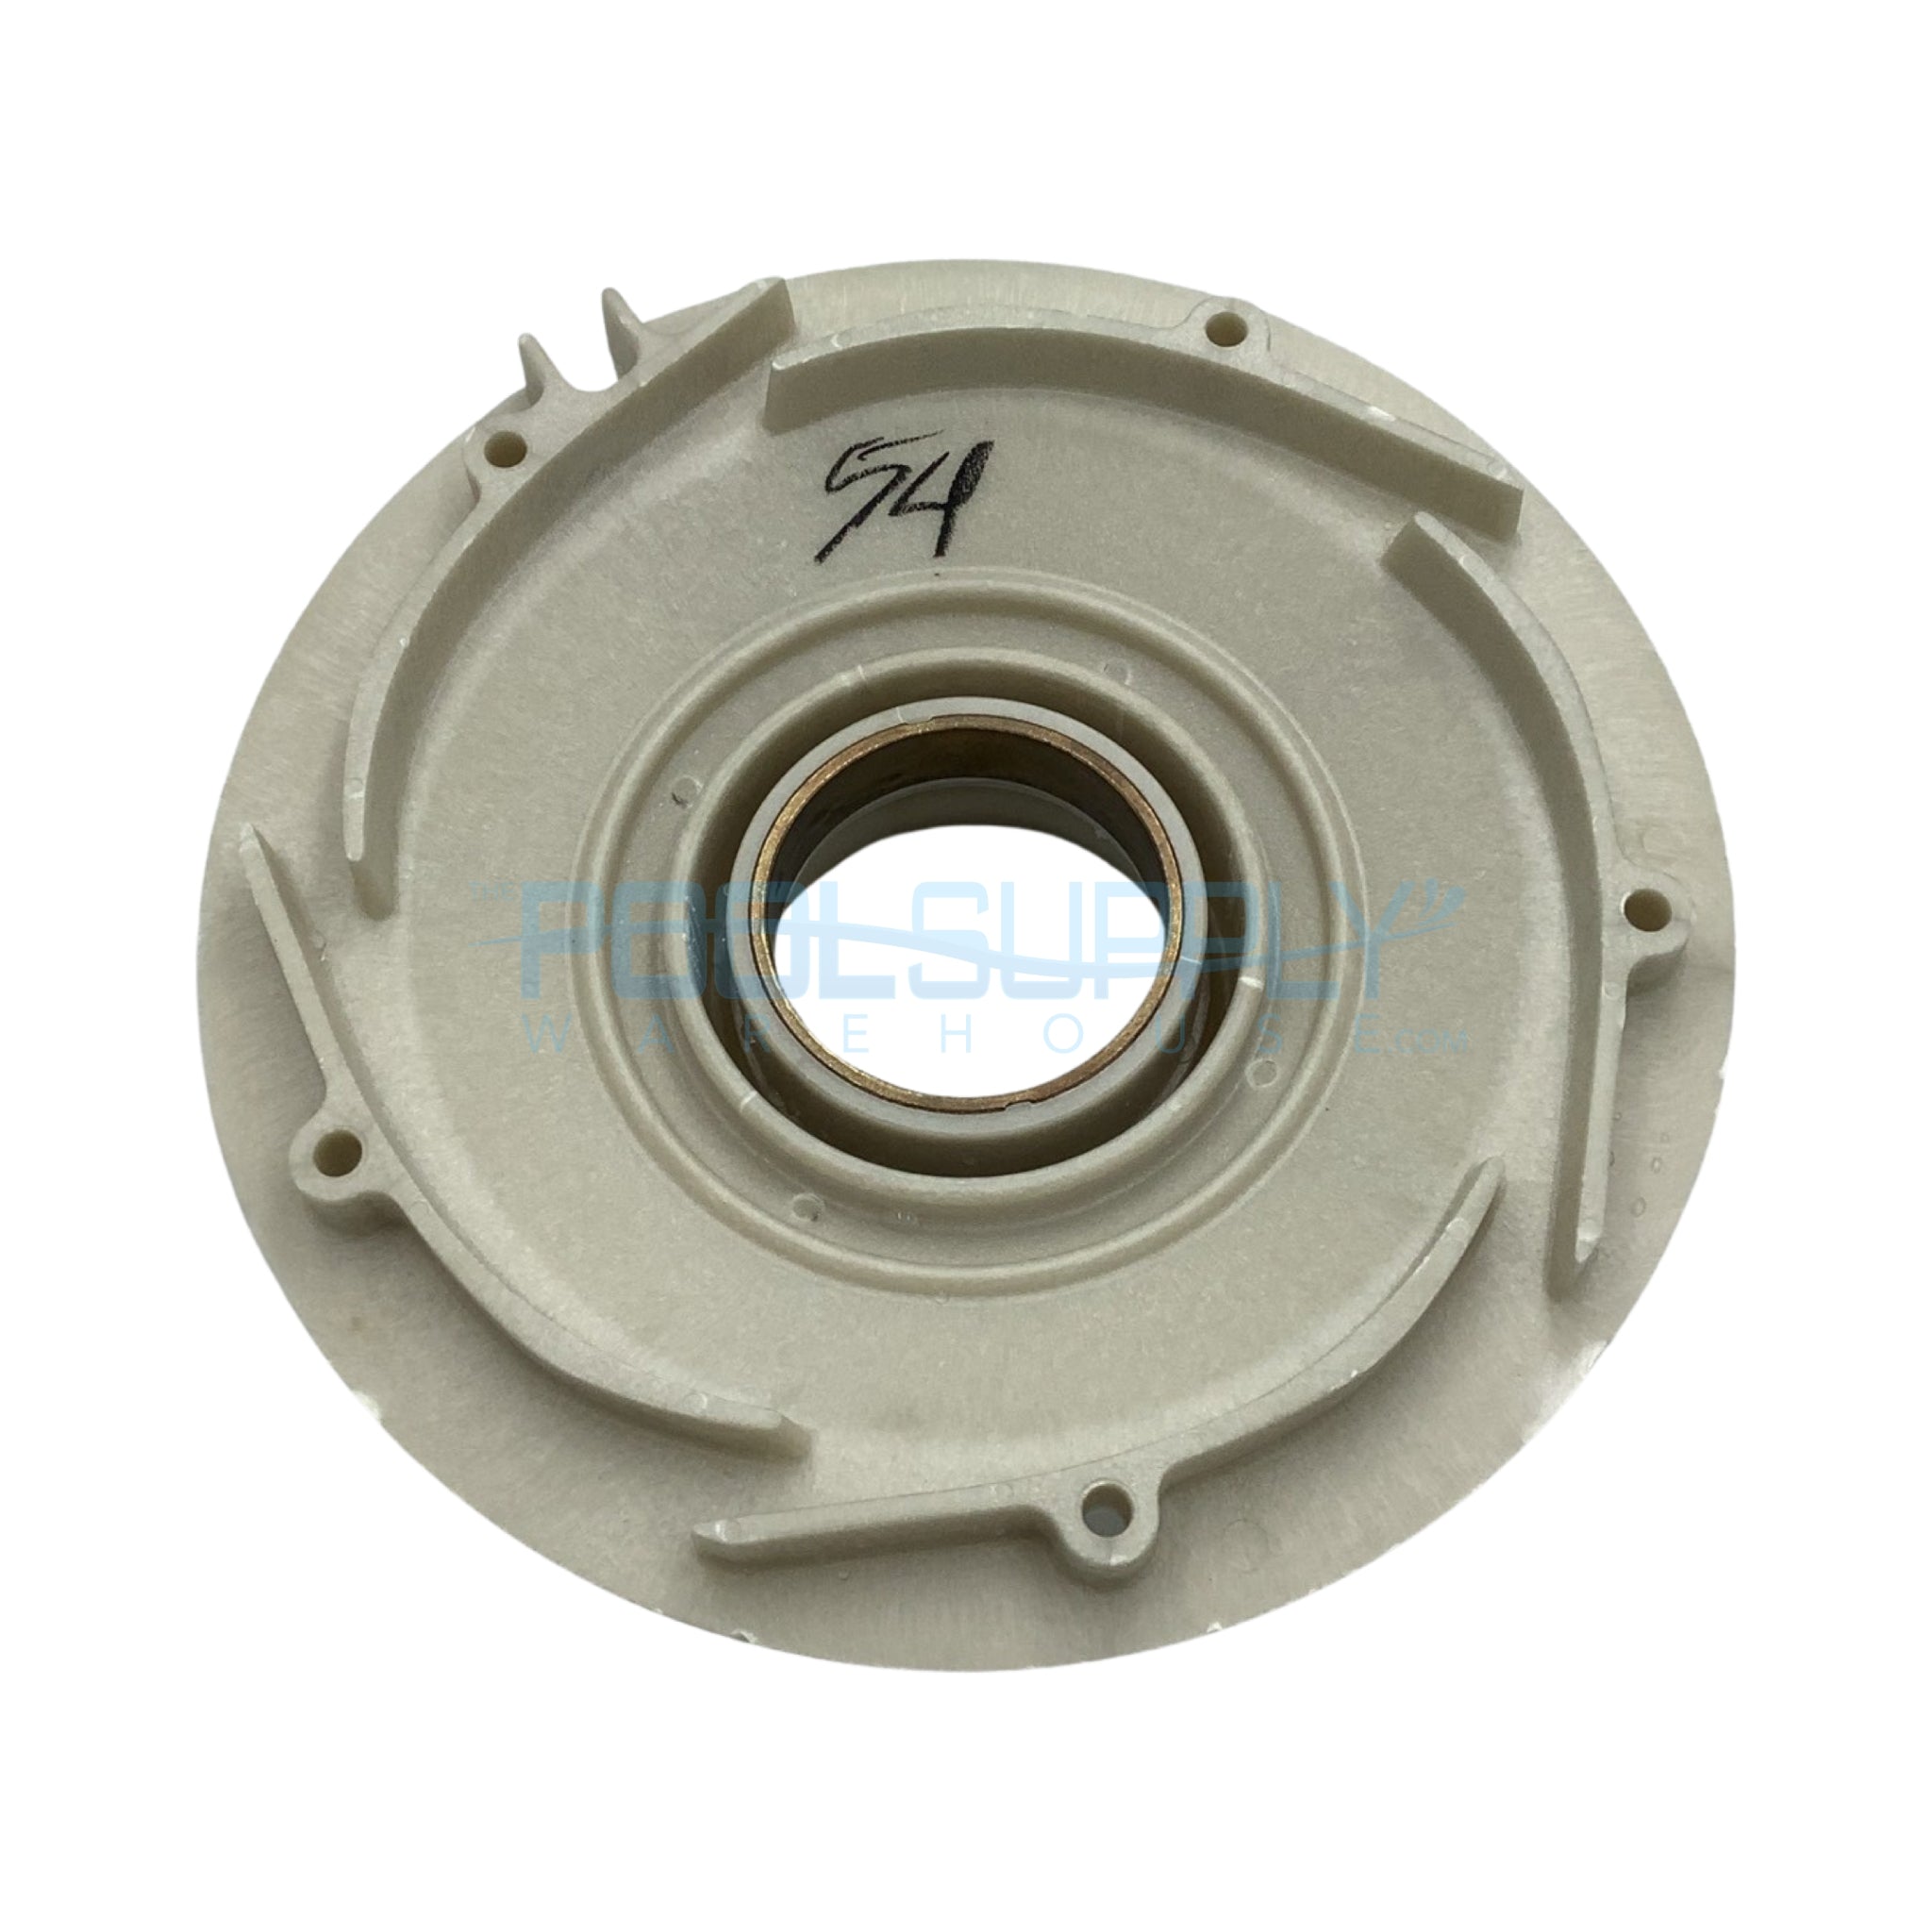 Pentair 1.5 to 3 HP Pump Diffuser - C1-271P